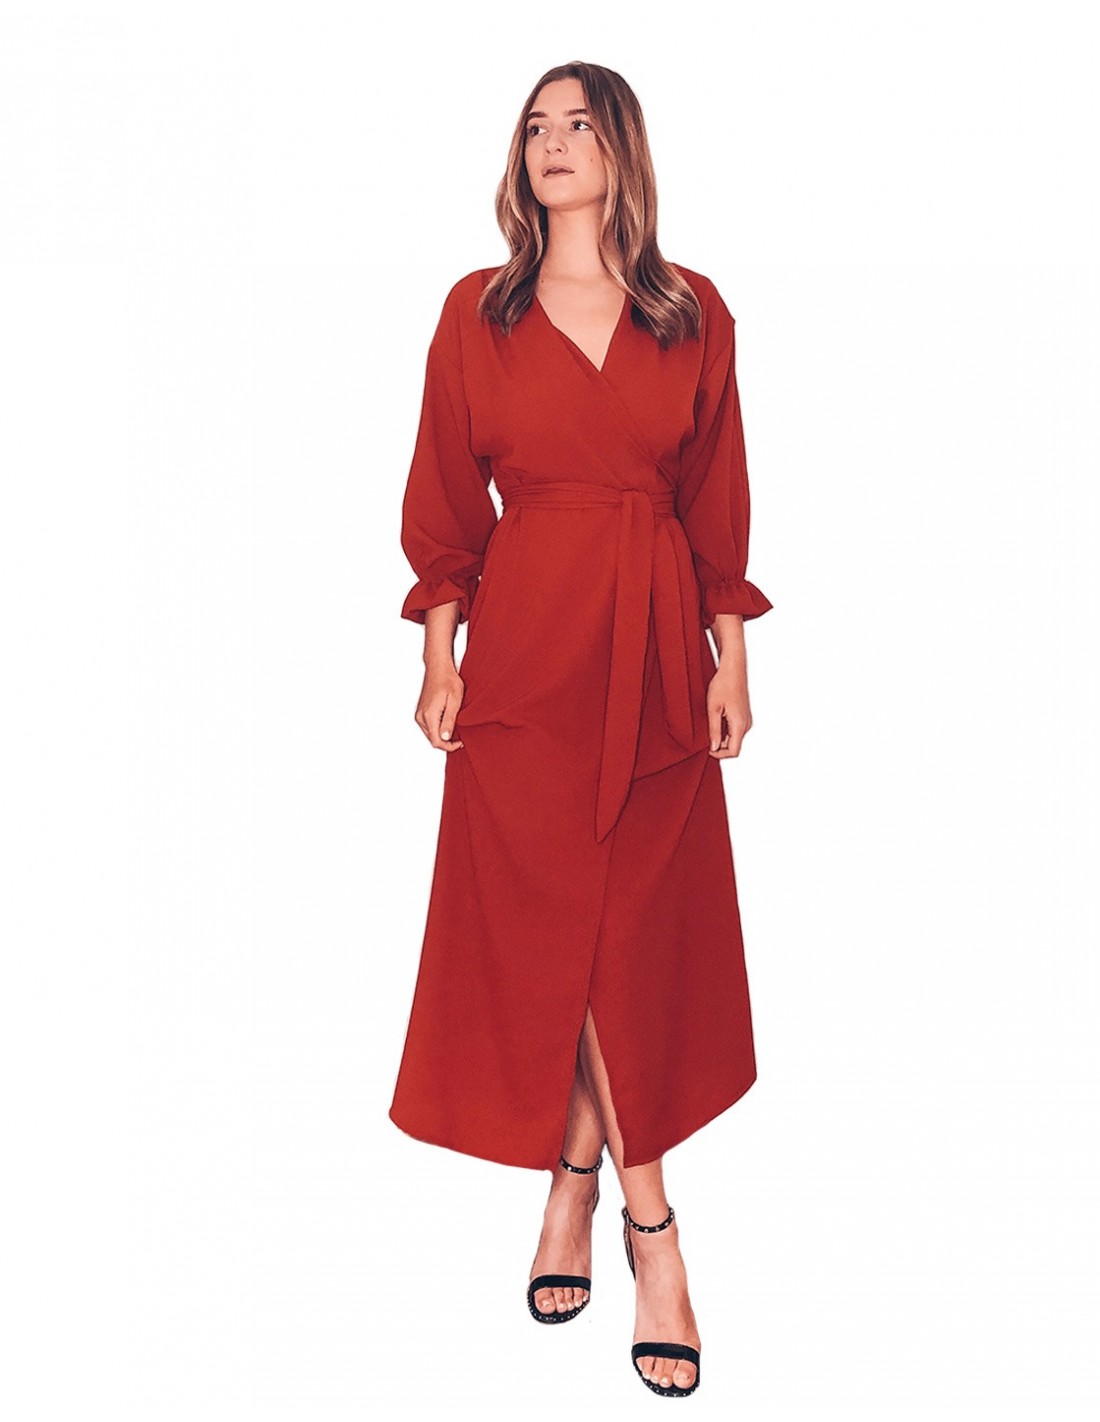 Draped red crepe dress | INVITADISIMA